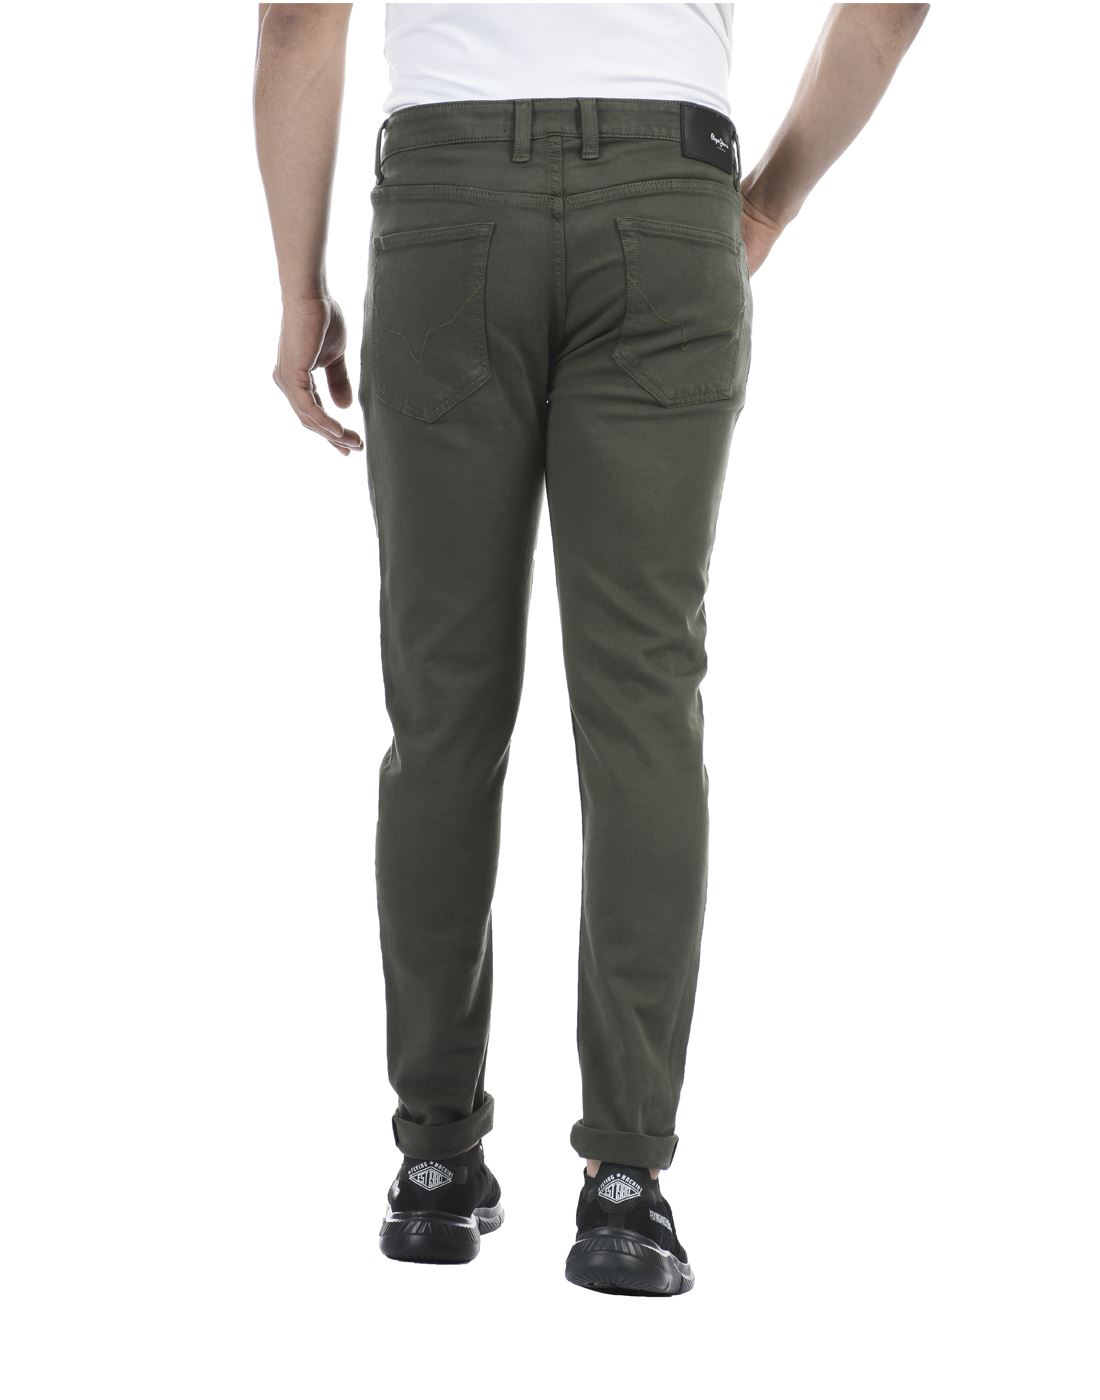 Buy Pepe Jeans Men's Slim Casual Pants (PM701995_Navy 36) at Amazon.in